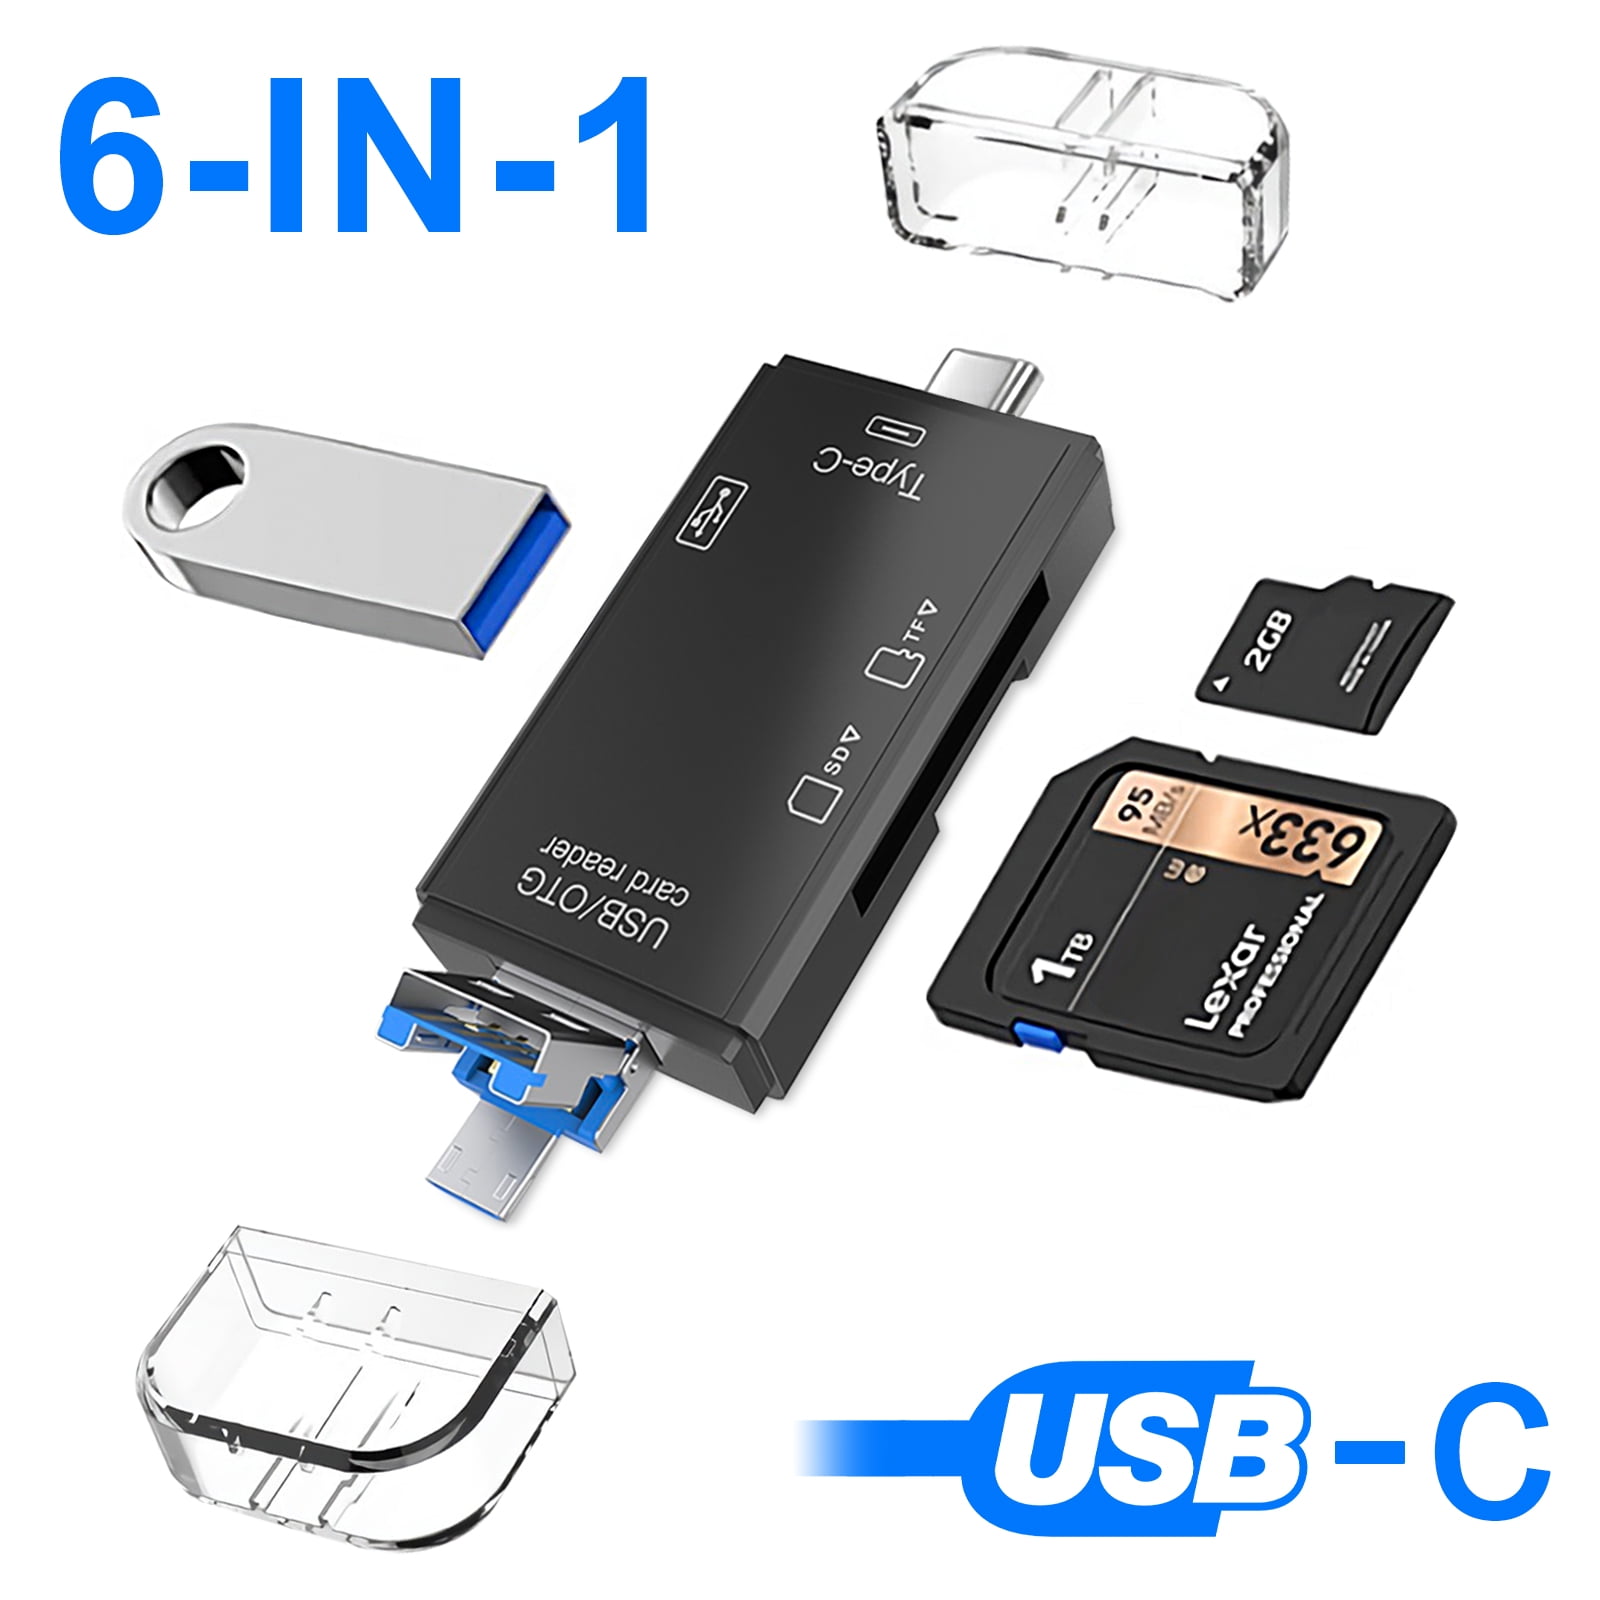 in 1 USB C SD Card Reader, EEEkit Portable Micro USB 3.0 Memory Card Reader with SD/Micro SD/TF/SDXC/SDHC/MMC/RS-MMC, Camera SD Card Adapter Support Windows, Linux, Mac OS, - Walmart.com